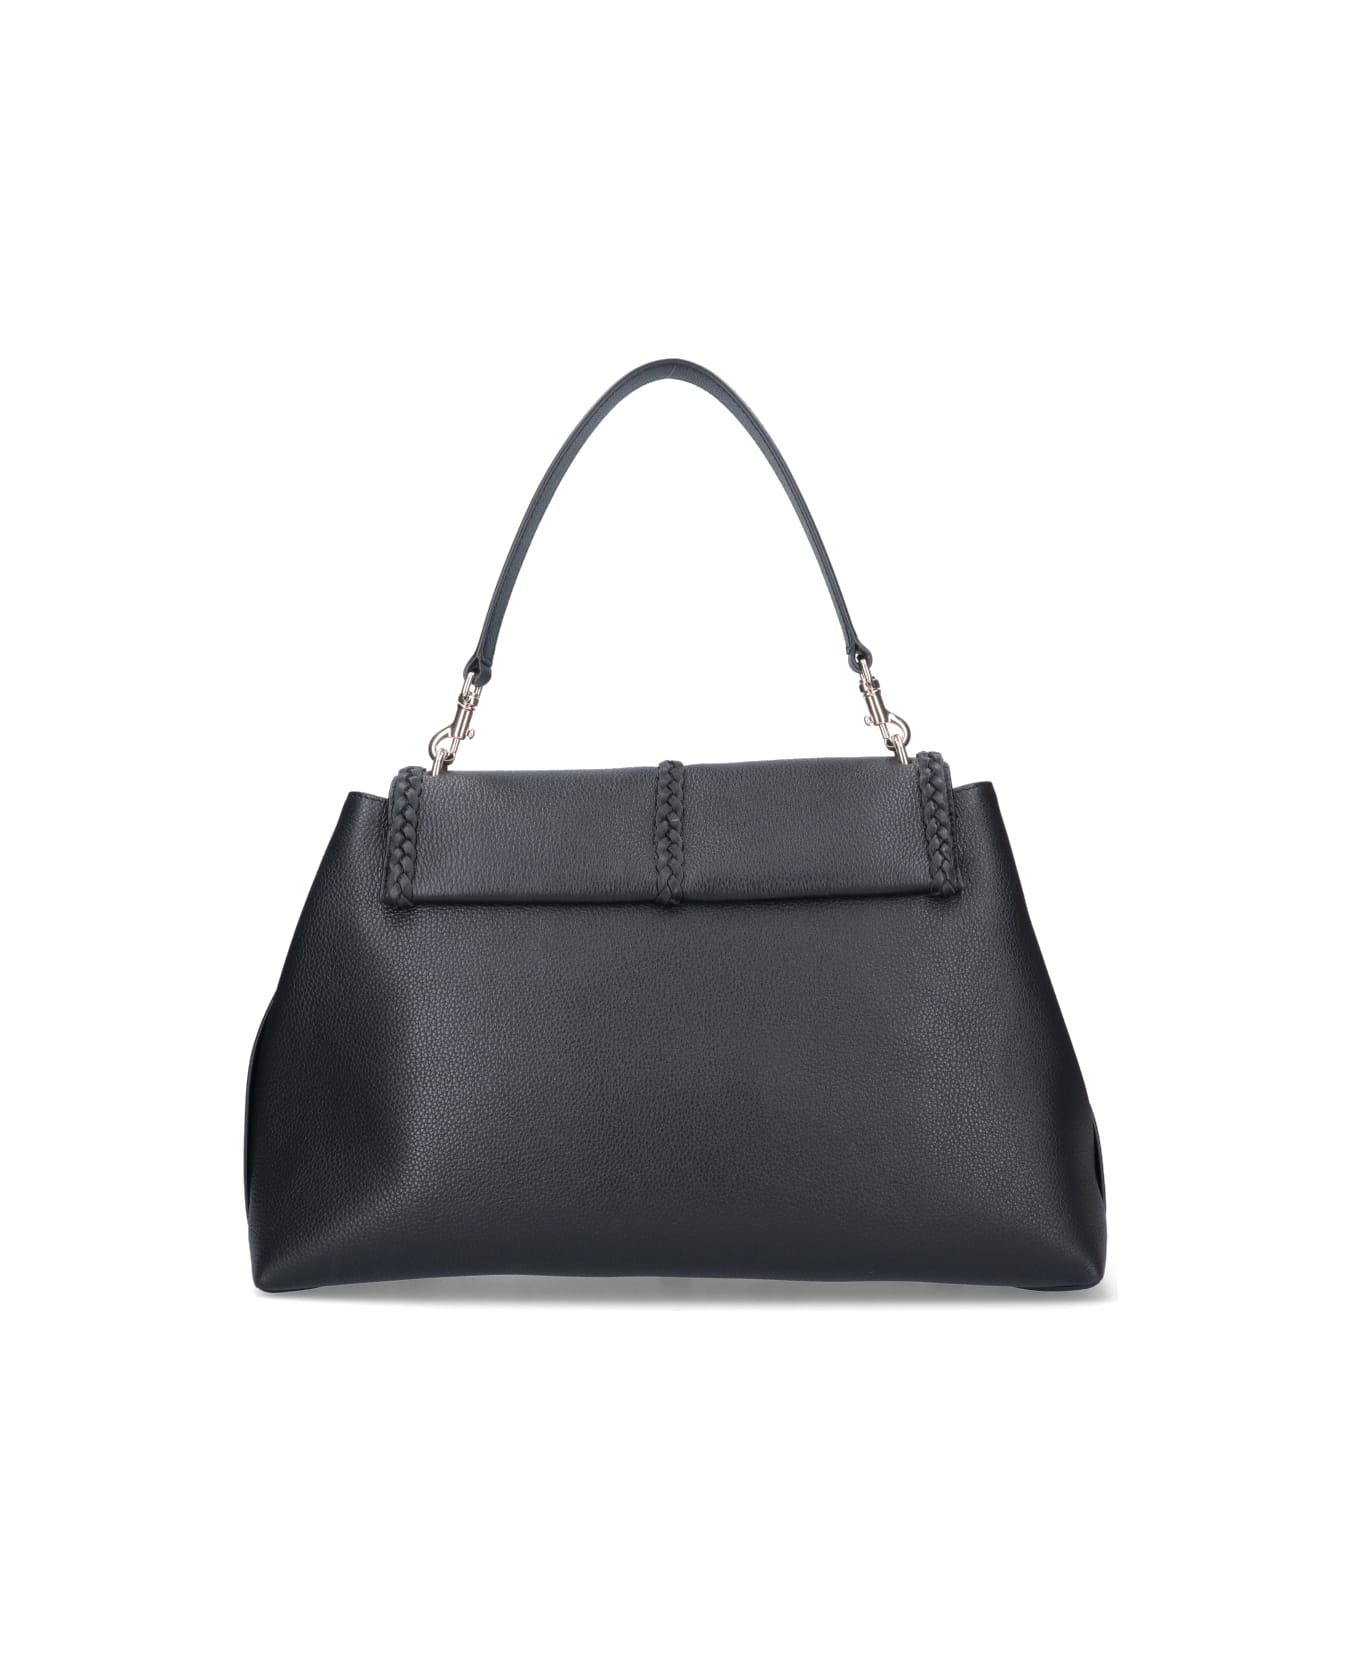 Chloé Penelope Large Leather Bag - Black